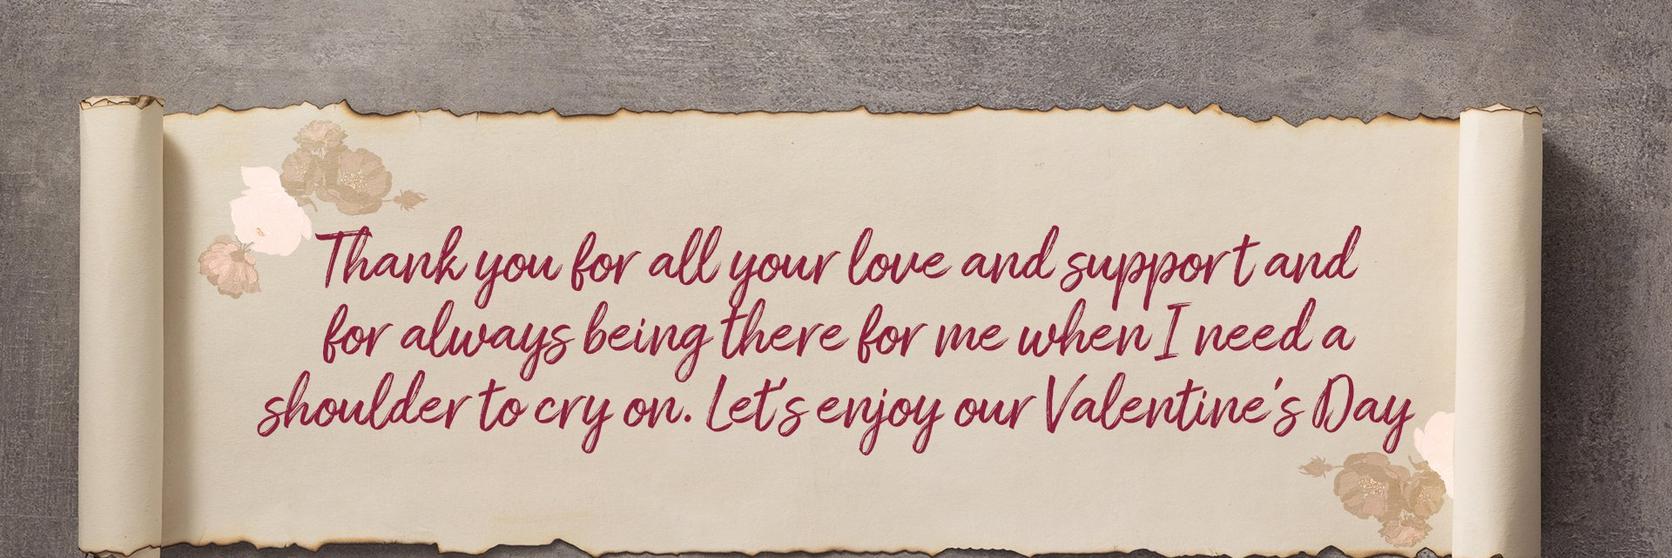 valentines-romantic-message